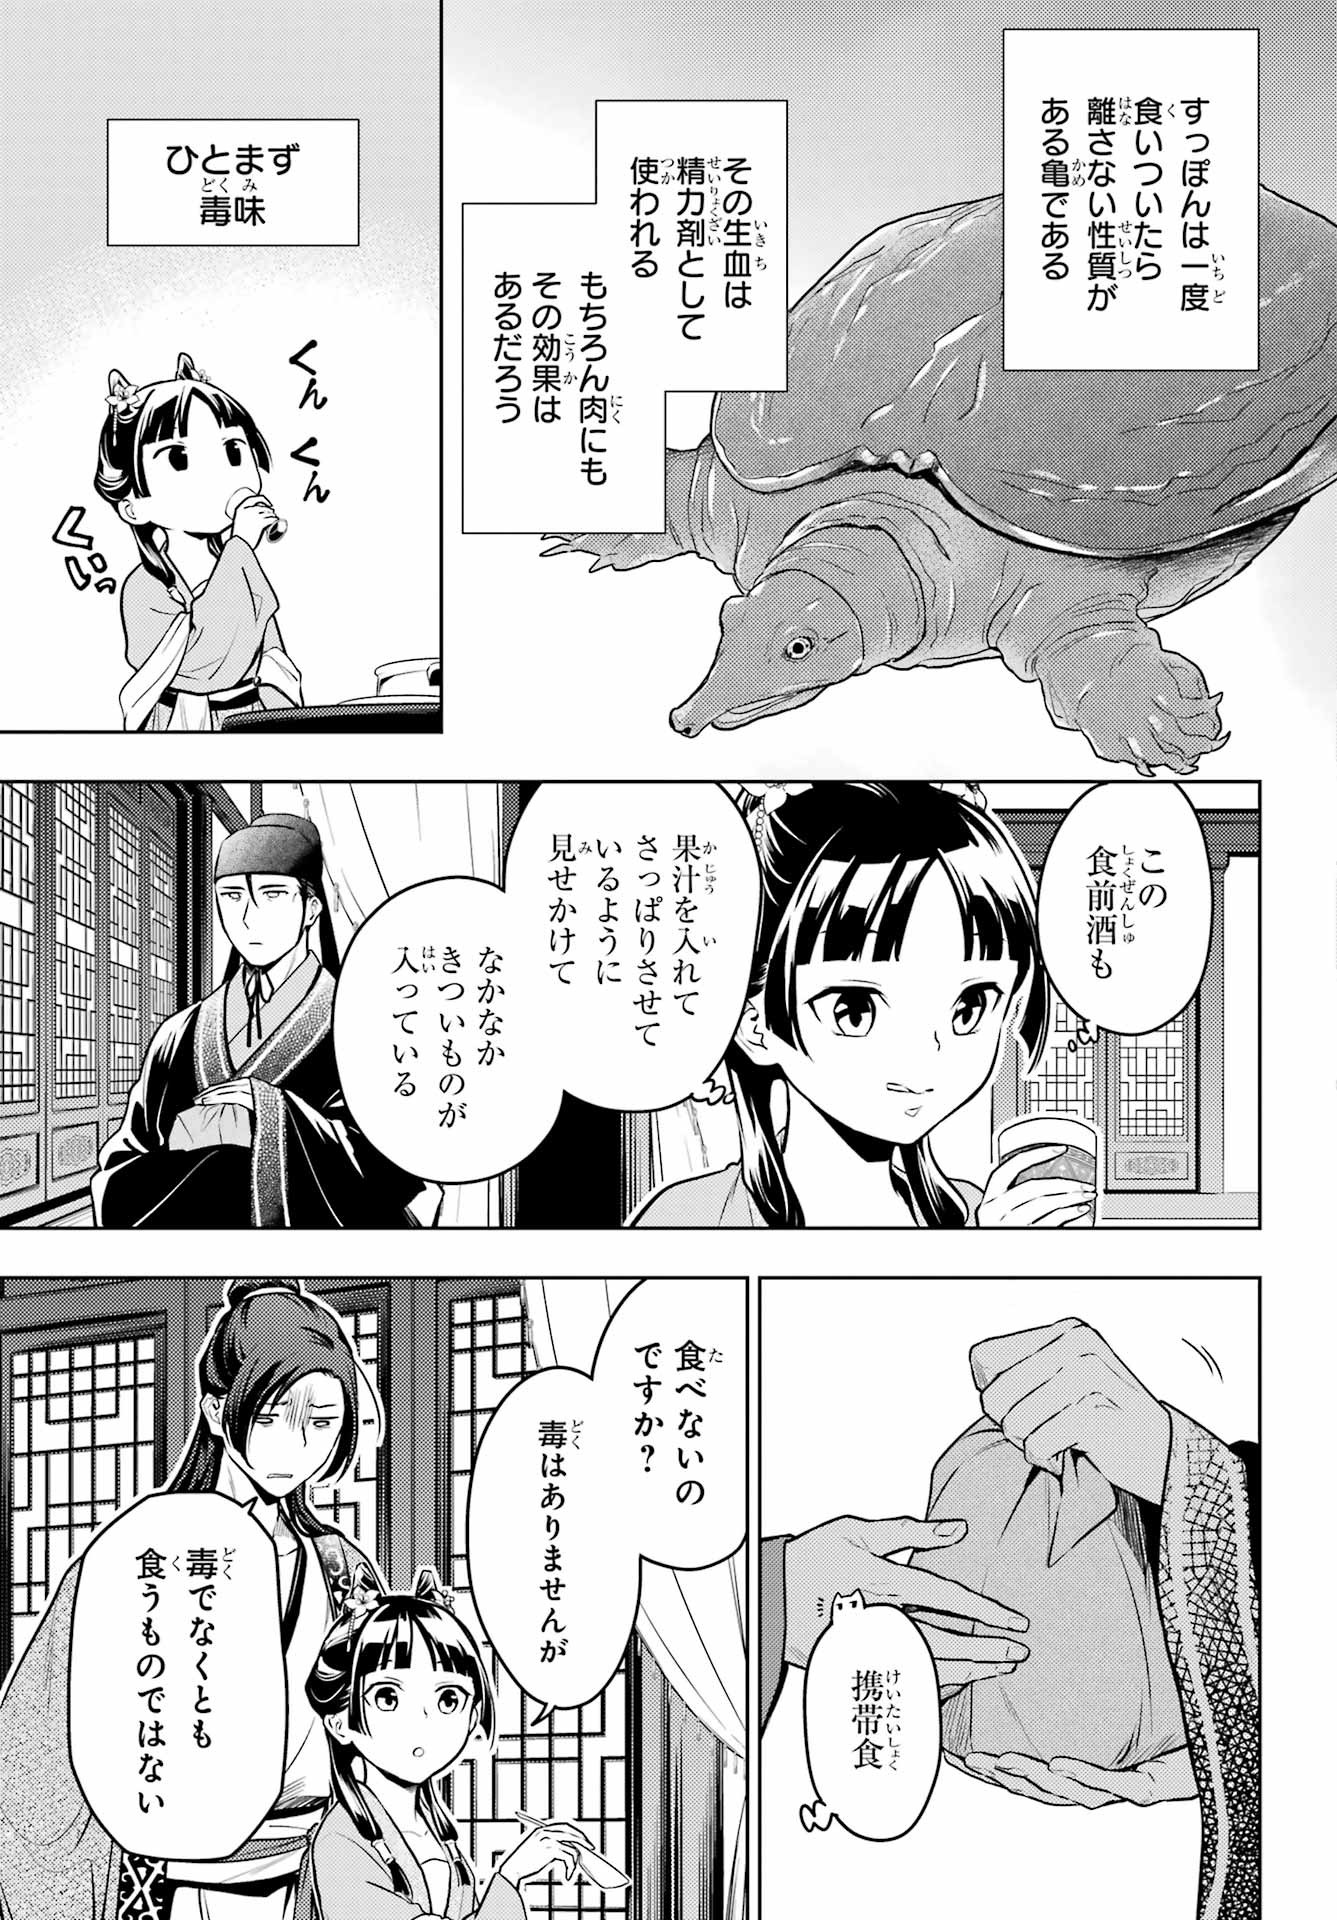 Kusuriya no Hitorigoto - Chapter 60-2 - Page 3